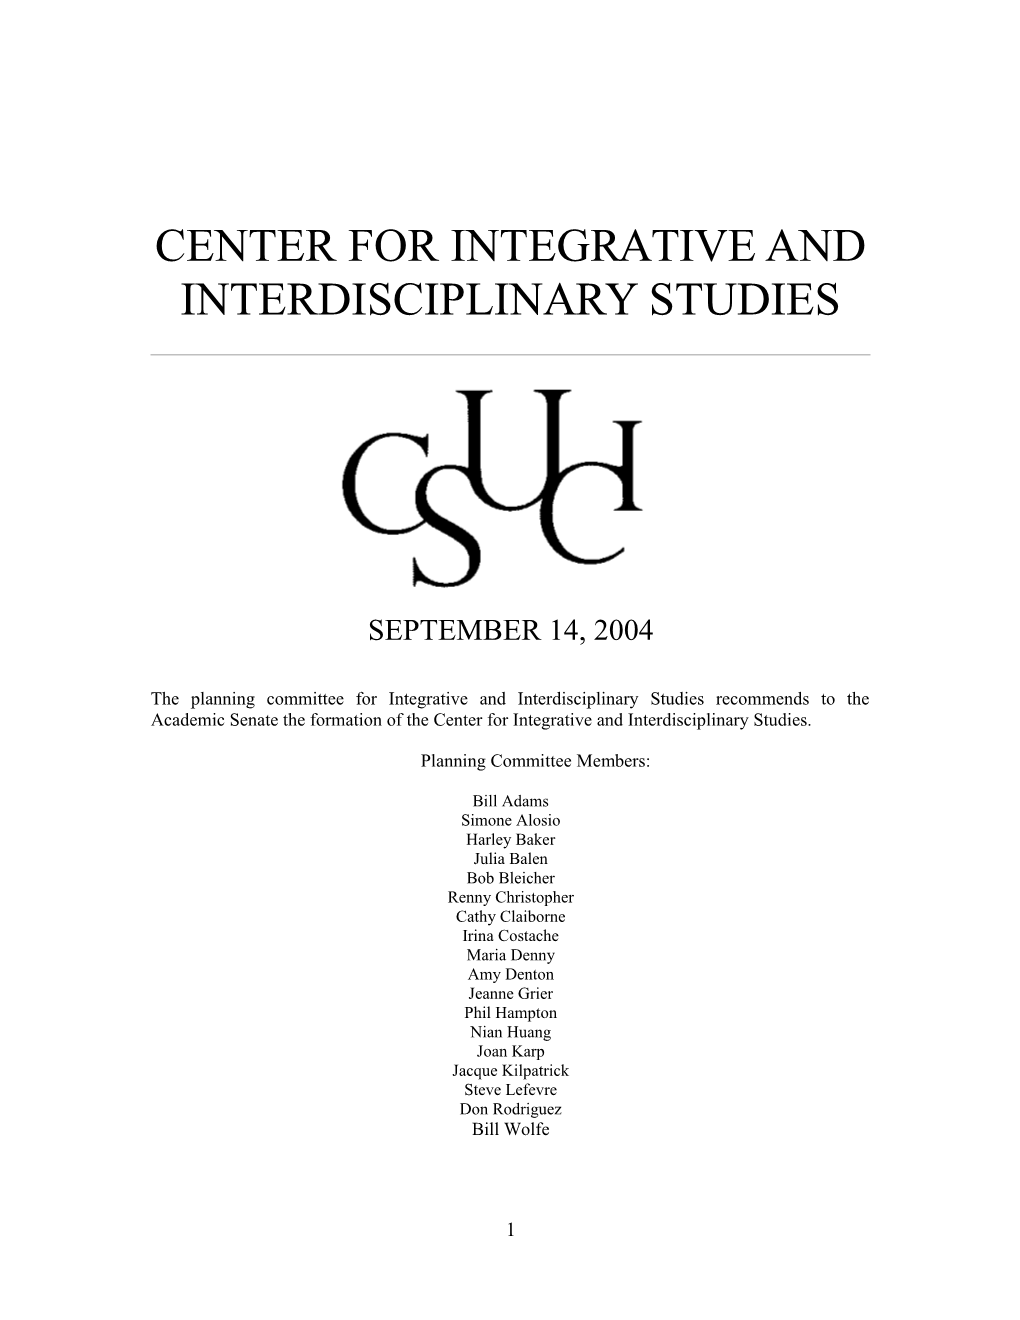 Center for Integrative and Interdisciplinary Studies